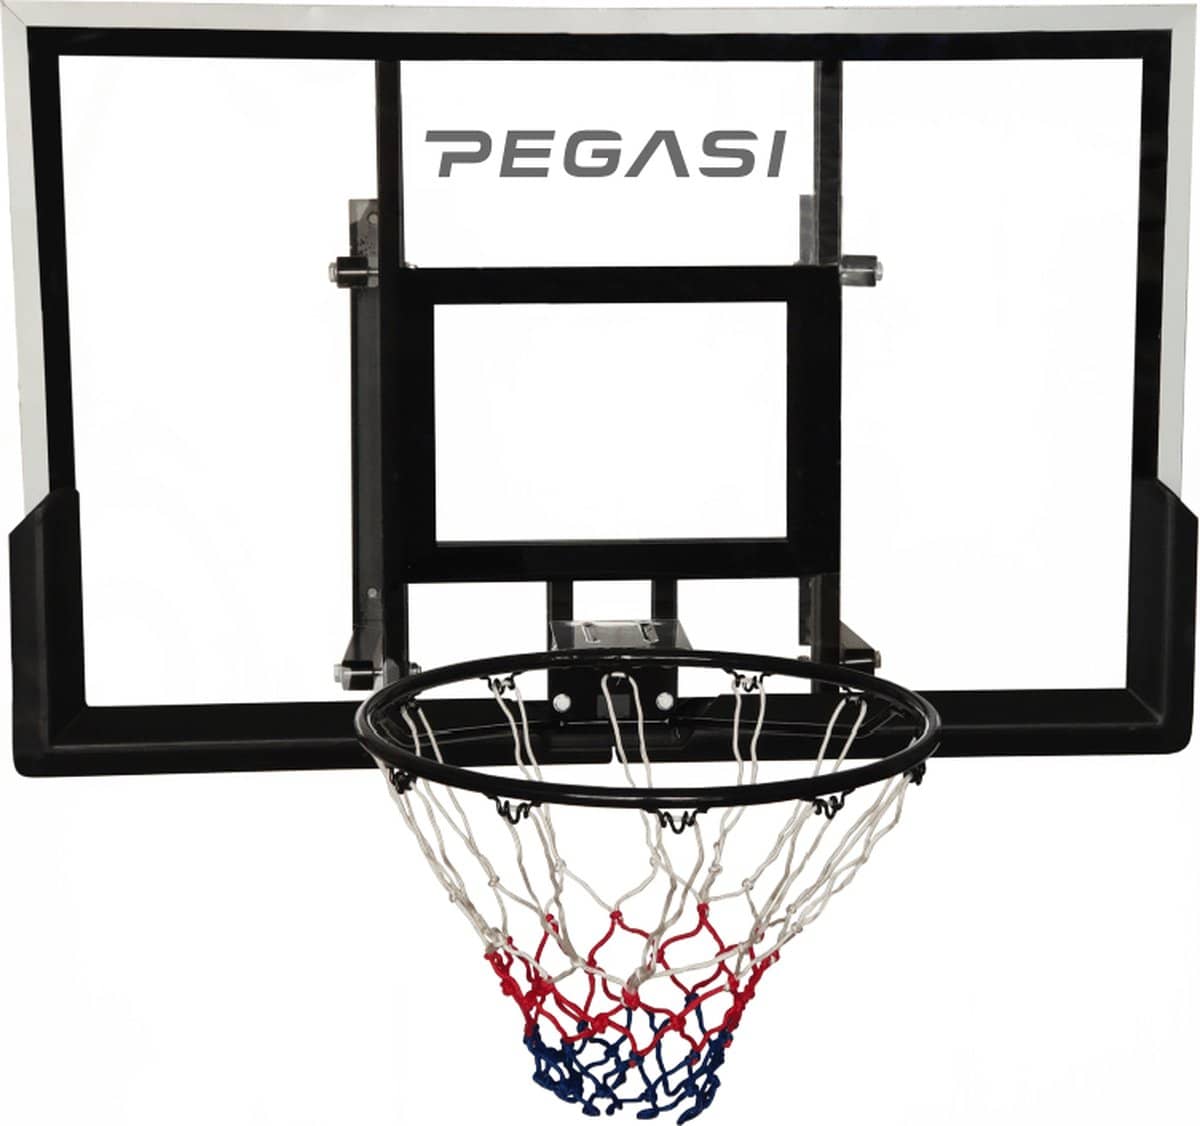 Pegasi basketbalbord 008 122x82cm. Direct monteren en spelen